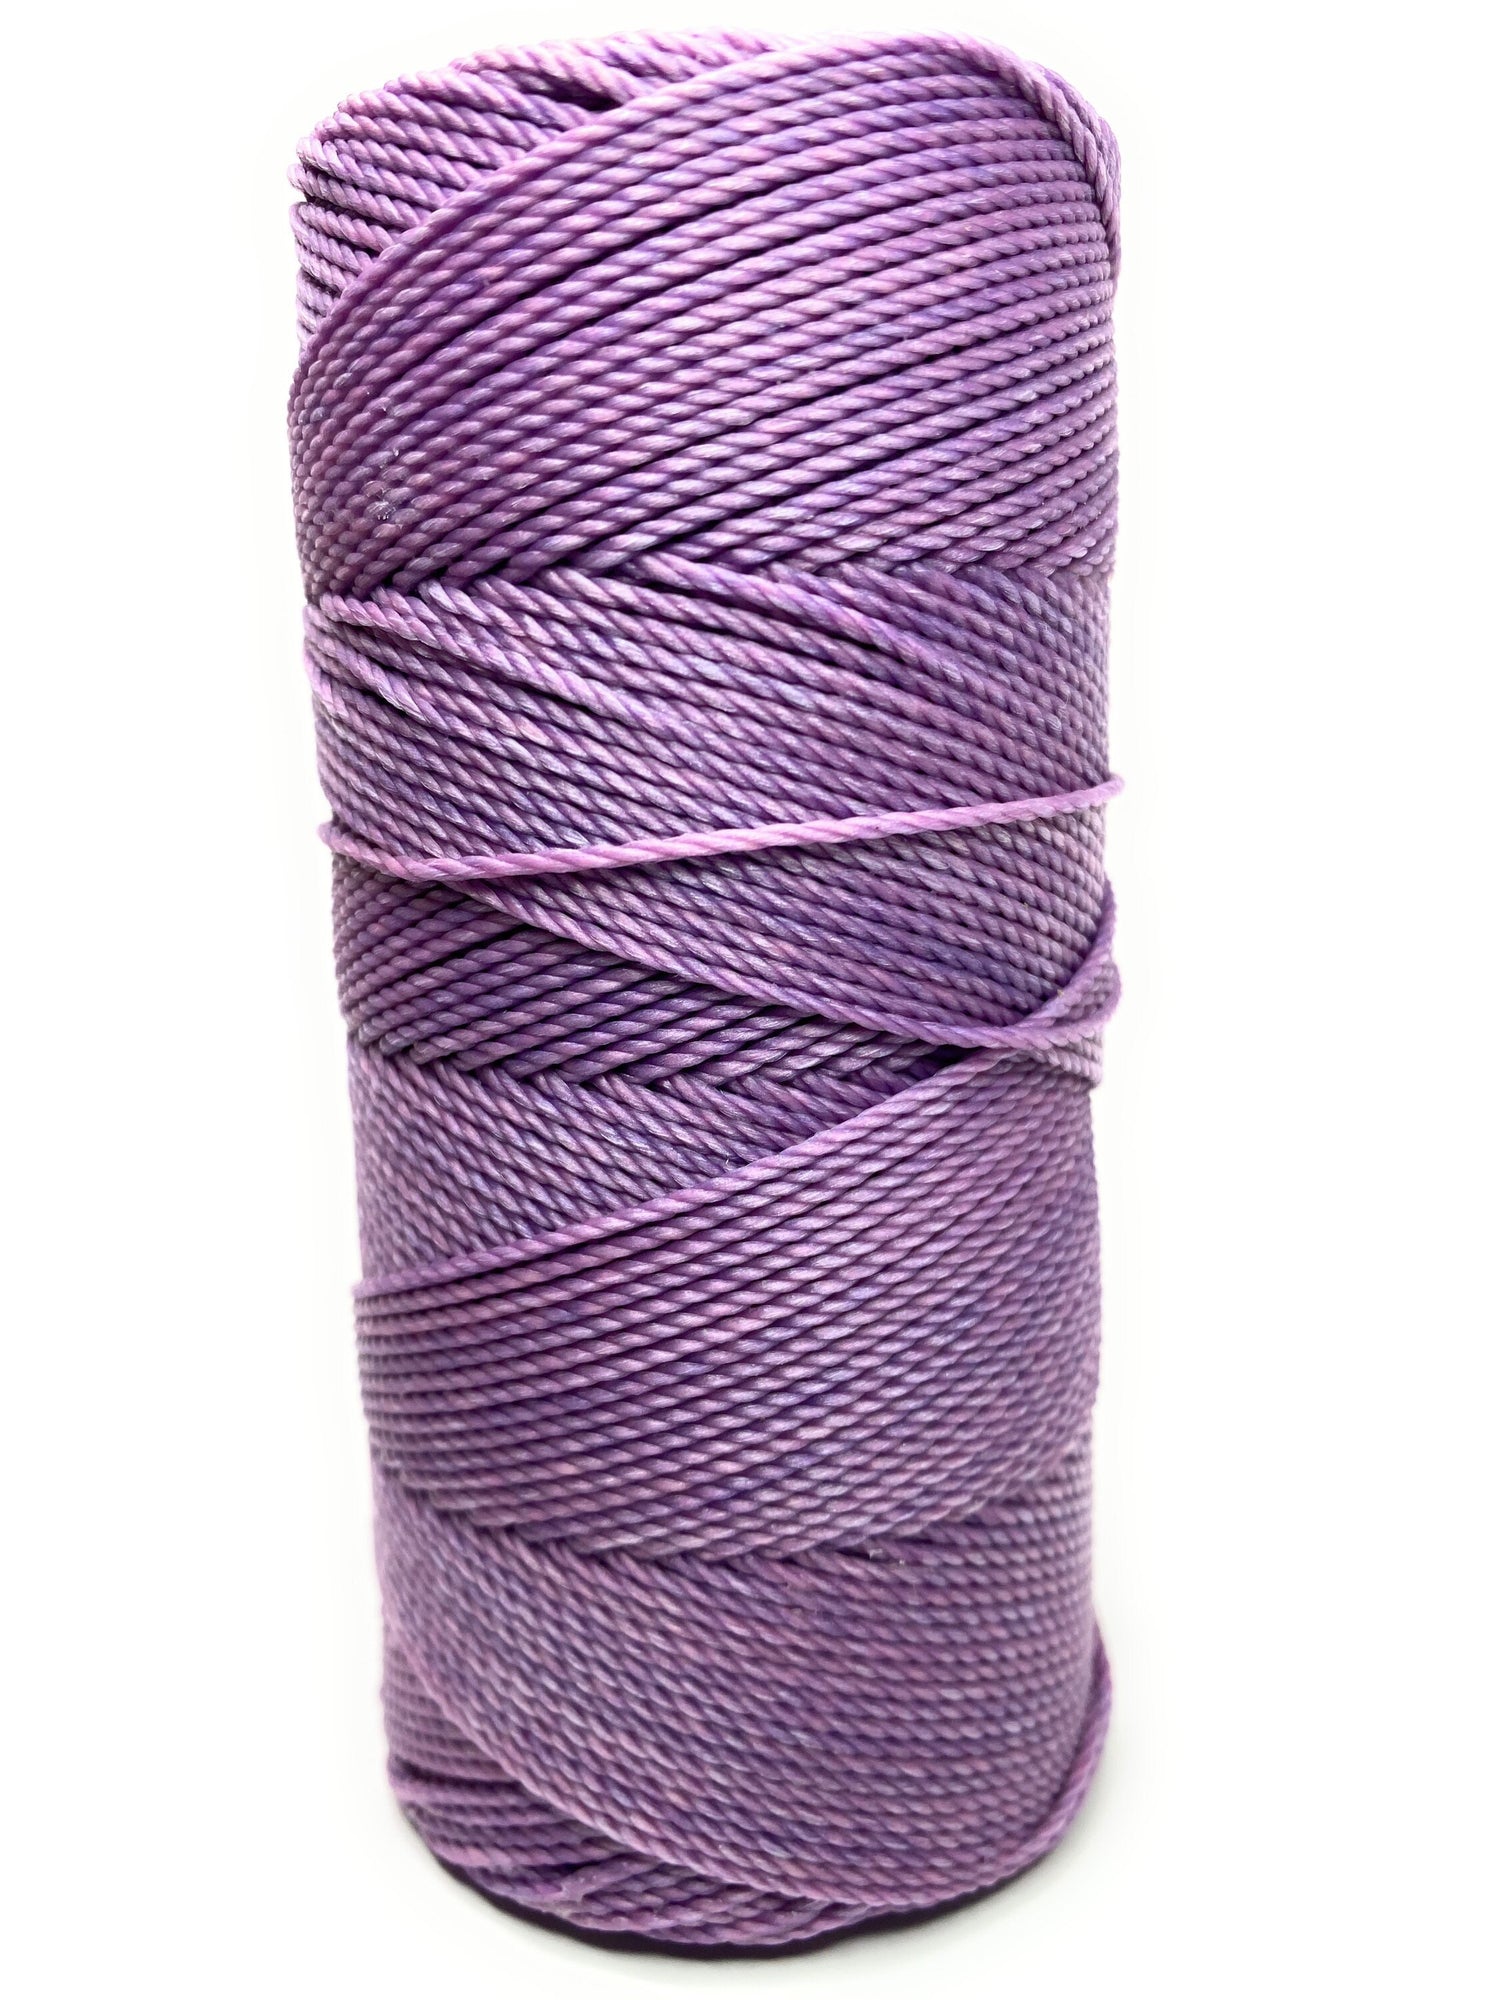 Linhasita Waxed Cord 1.5 mm Lilac Lavender Light Purple Macrame PE-6/100G TEX 861 COR 236 116 Meters